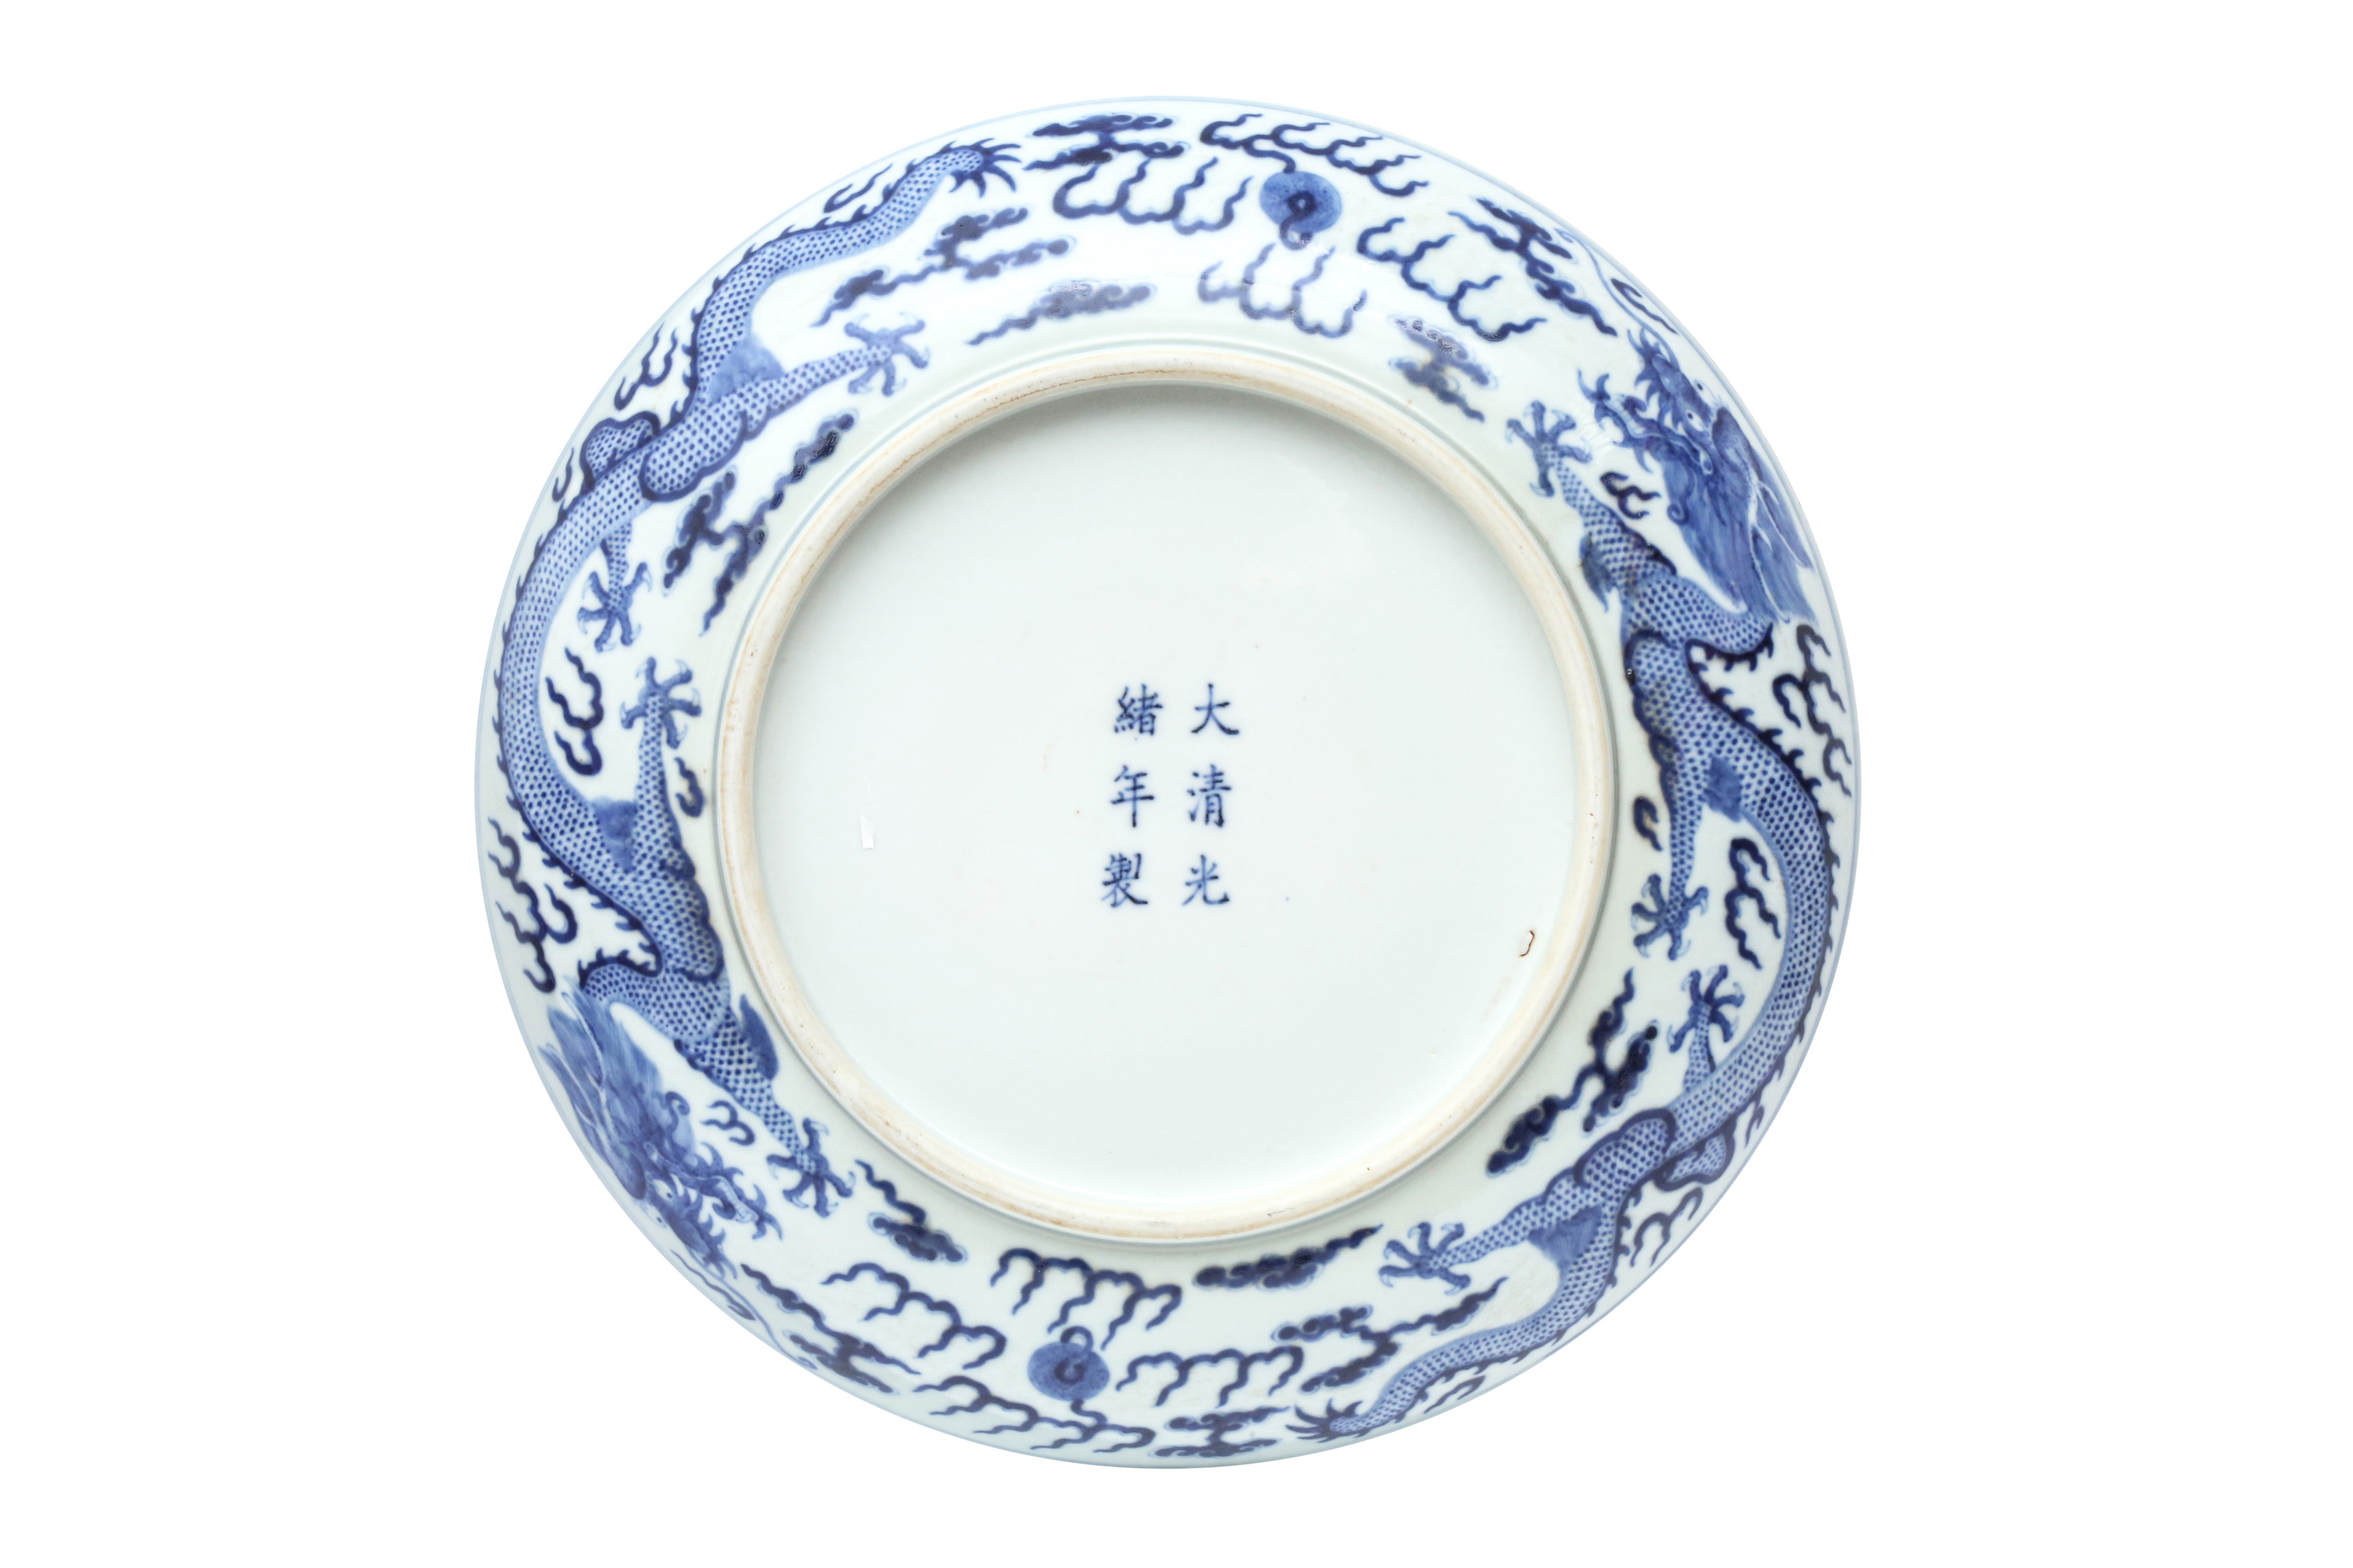 A LARGE CHINESE BLUE AND WHITE 'DRAGONS' DISH 清光緒 青花雙龍趕珠紋大盤 《大清光緒年製》款 - Image 2 of 16